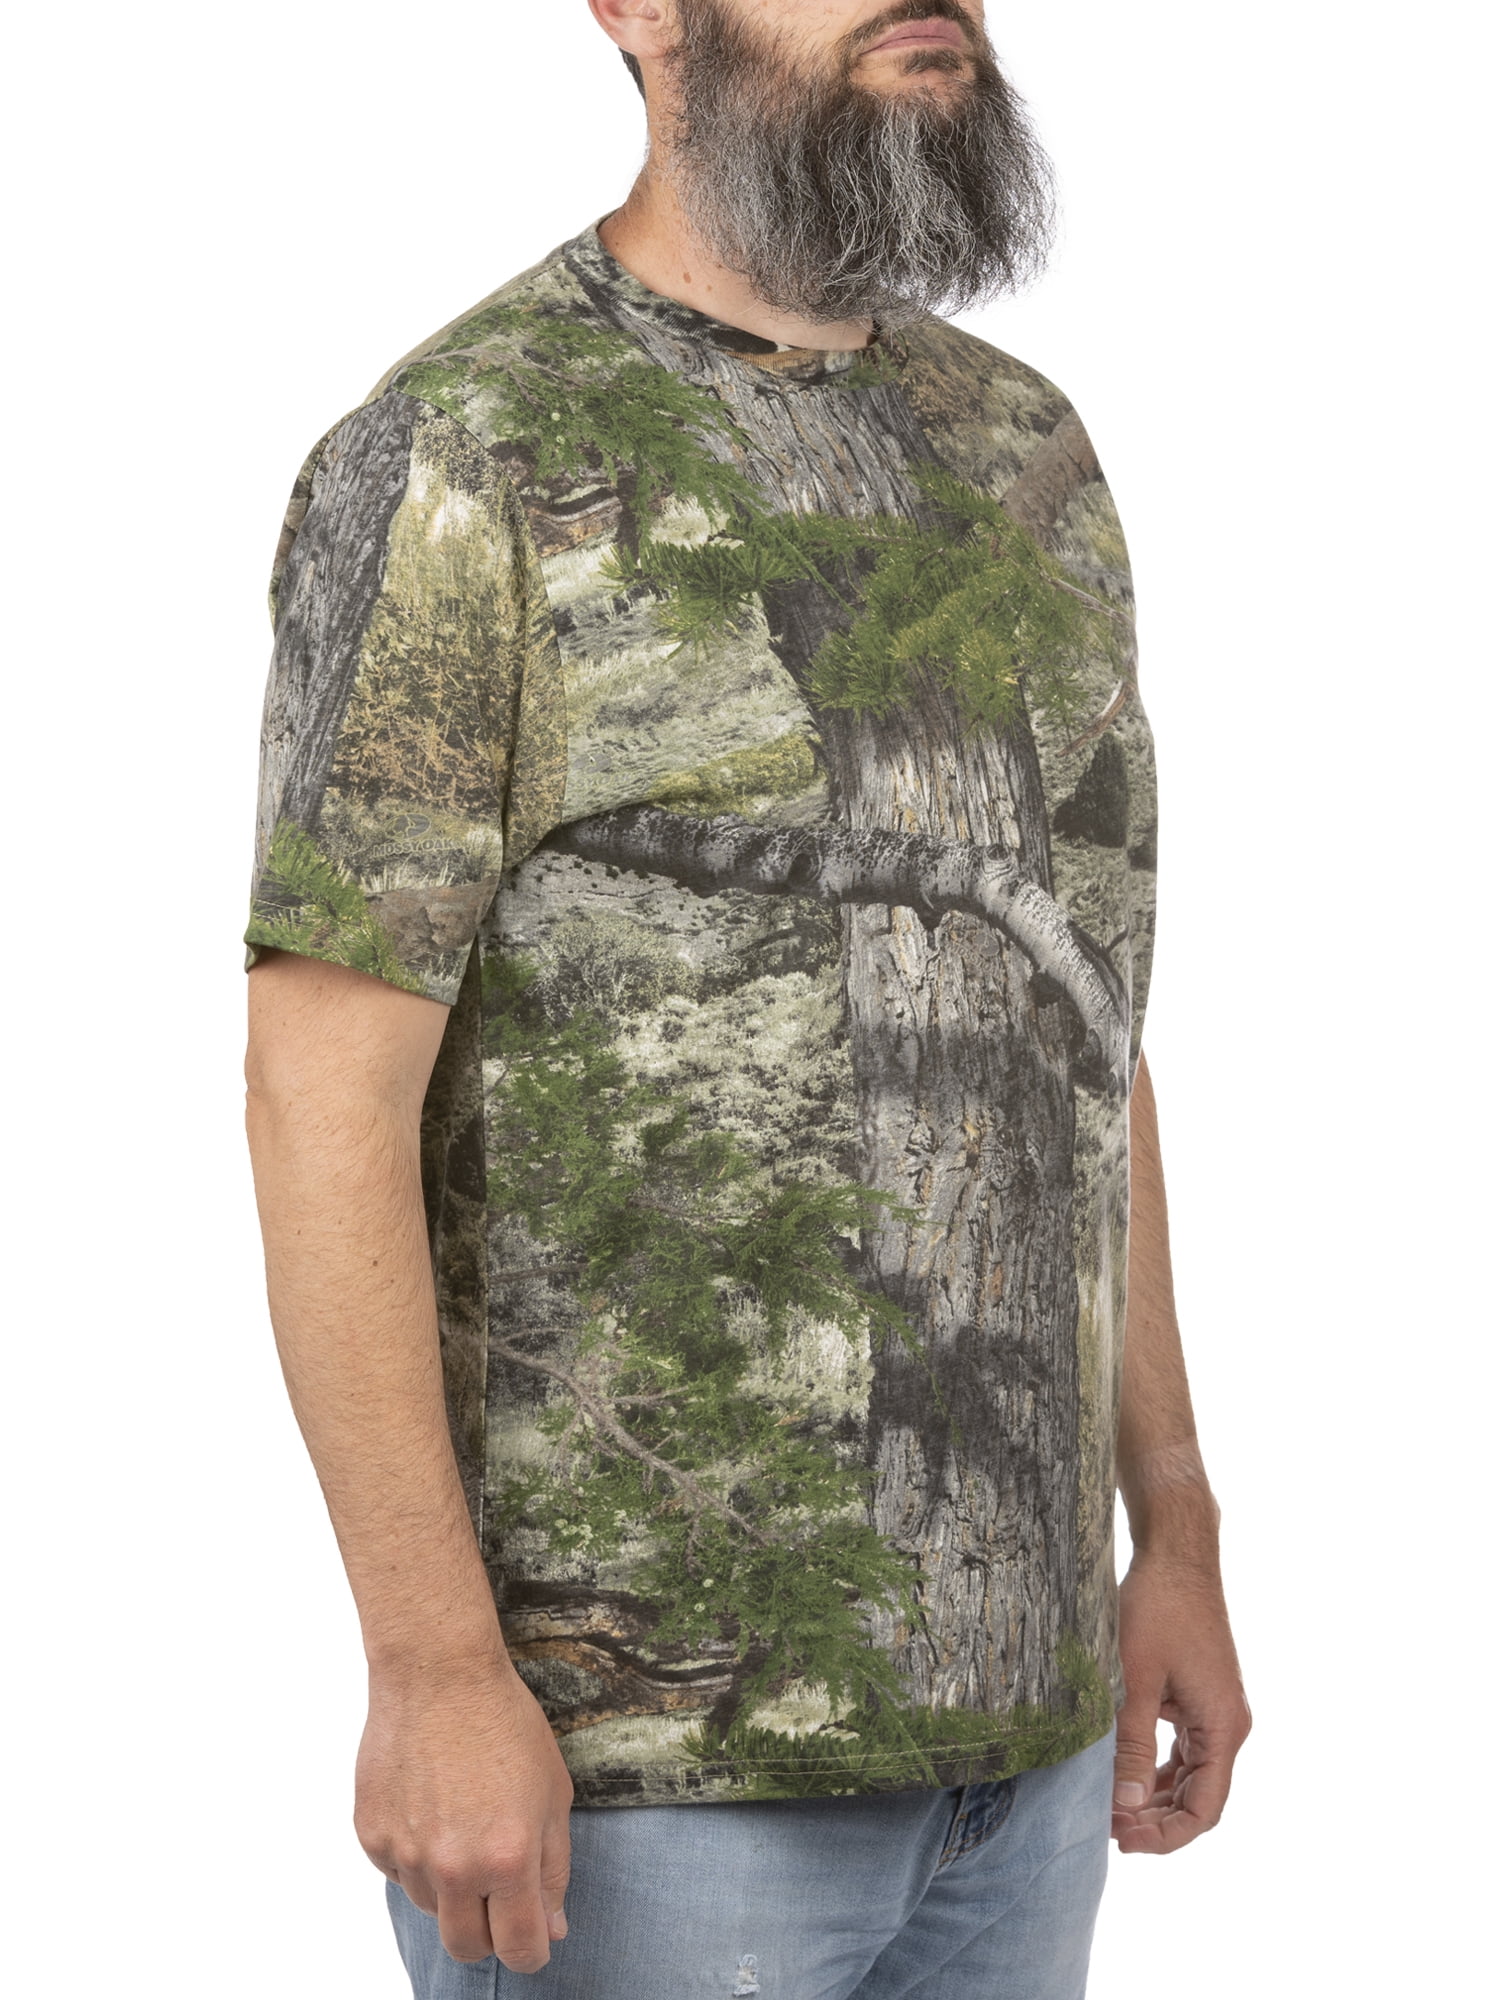  Mossy Oak Standard Mens Camo Hunting Shirt Short Sleeve Cotton,  Break-up Country, Medium : Clothing, Shoes & Jewelry